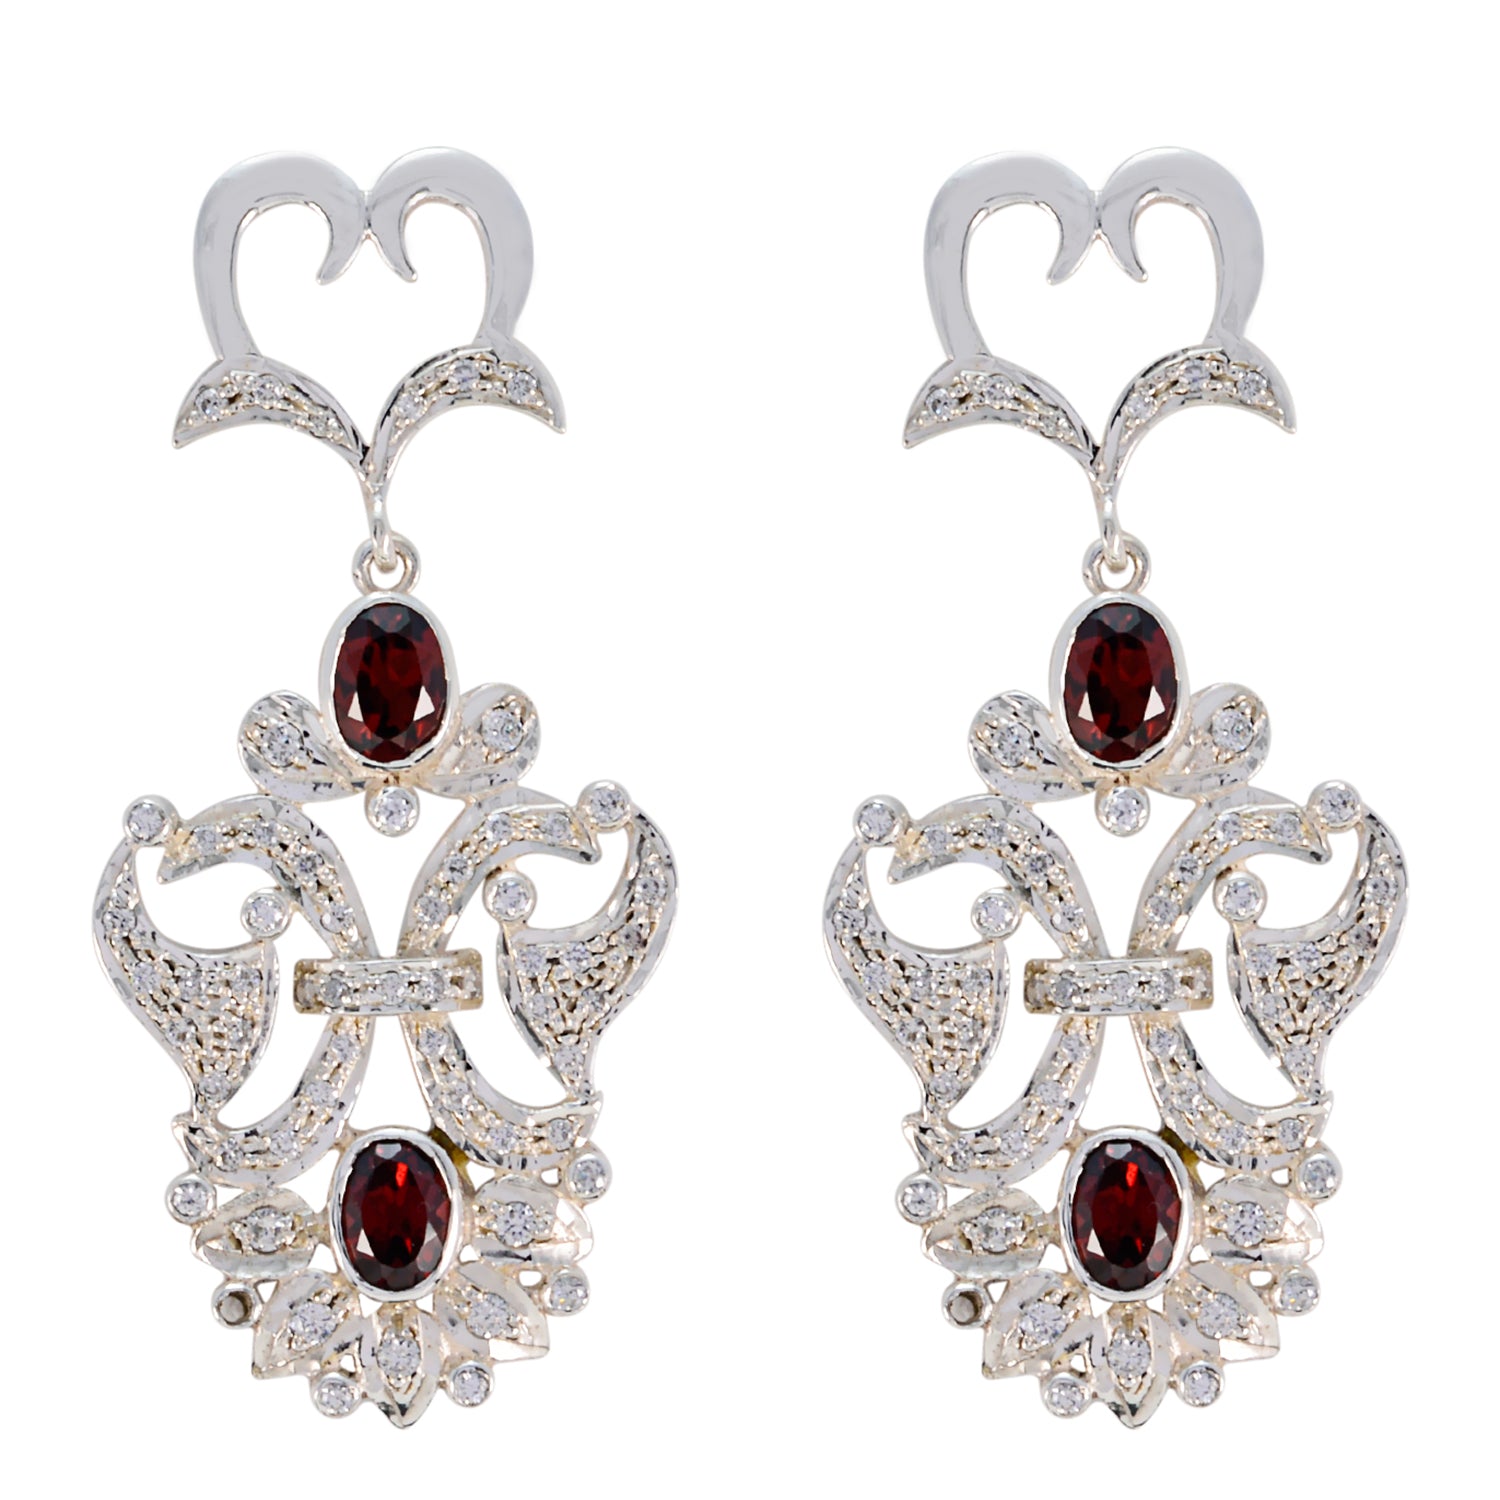 Riyo Real Gemstones oval Faceted Red Garnet Silver Earrings gift for st. patricks day